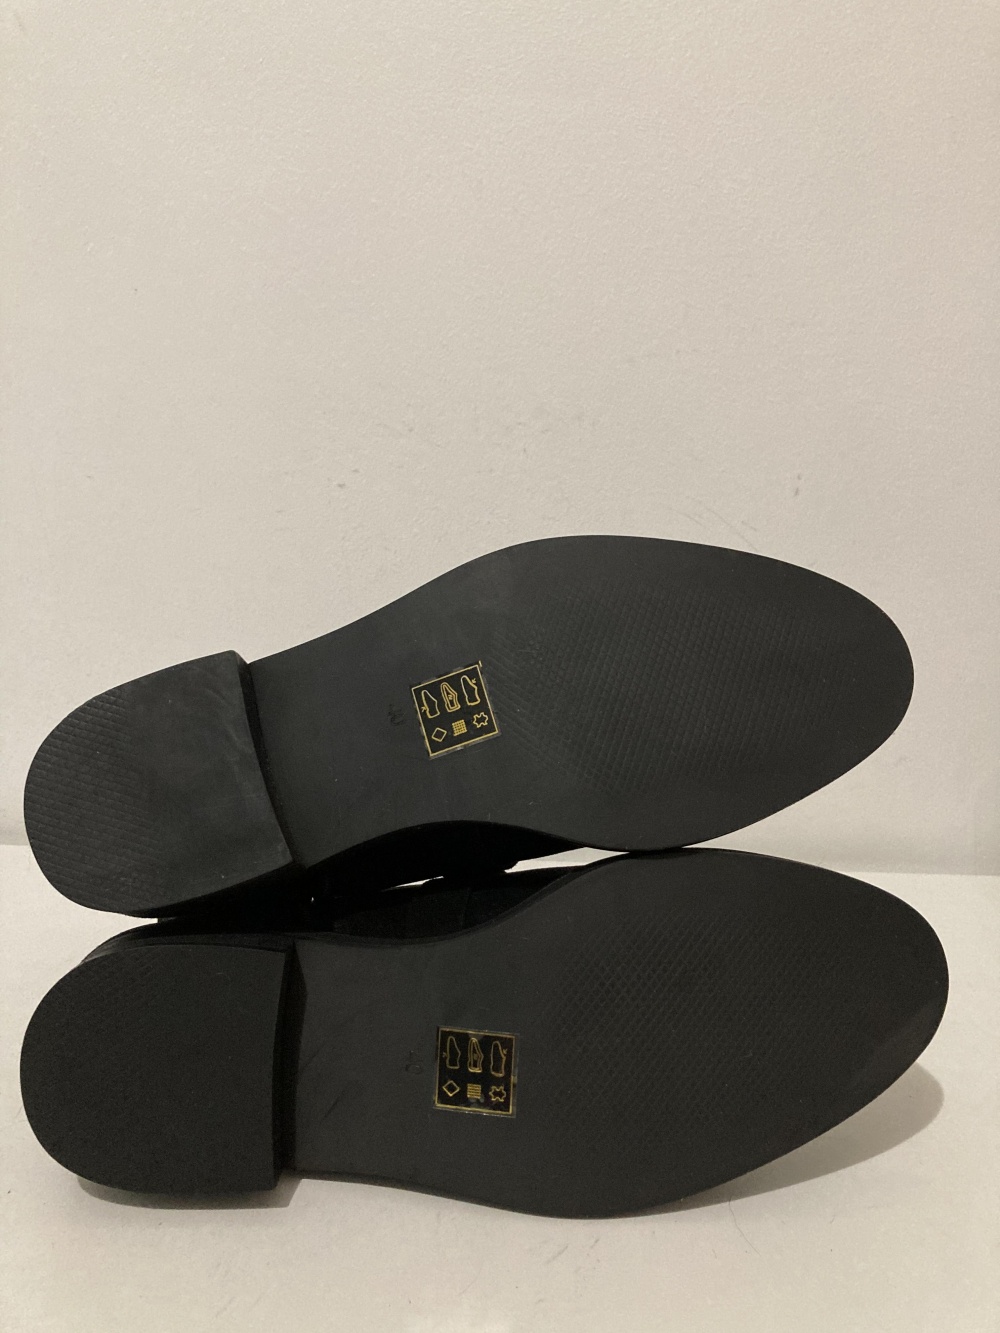 Ботинки “ Riveri “, 39-39,5 размер